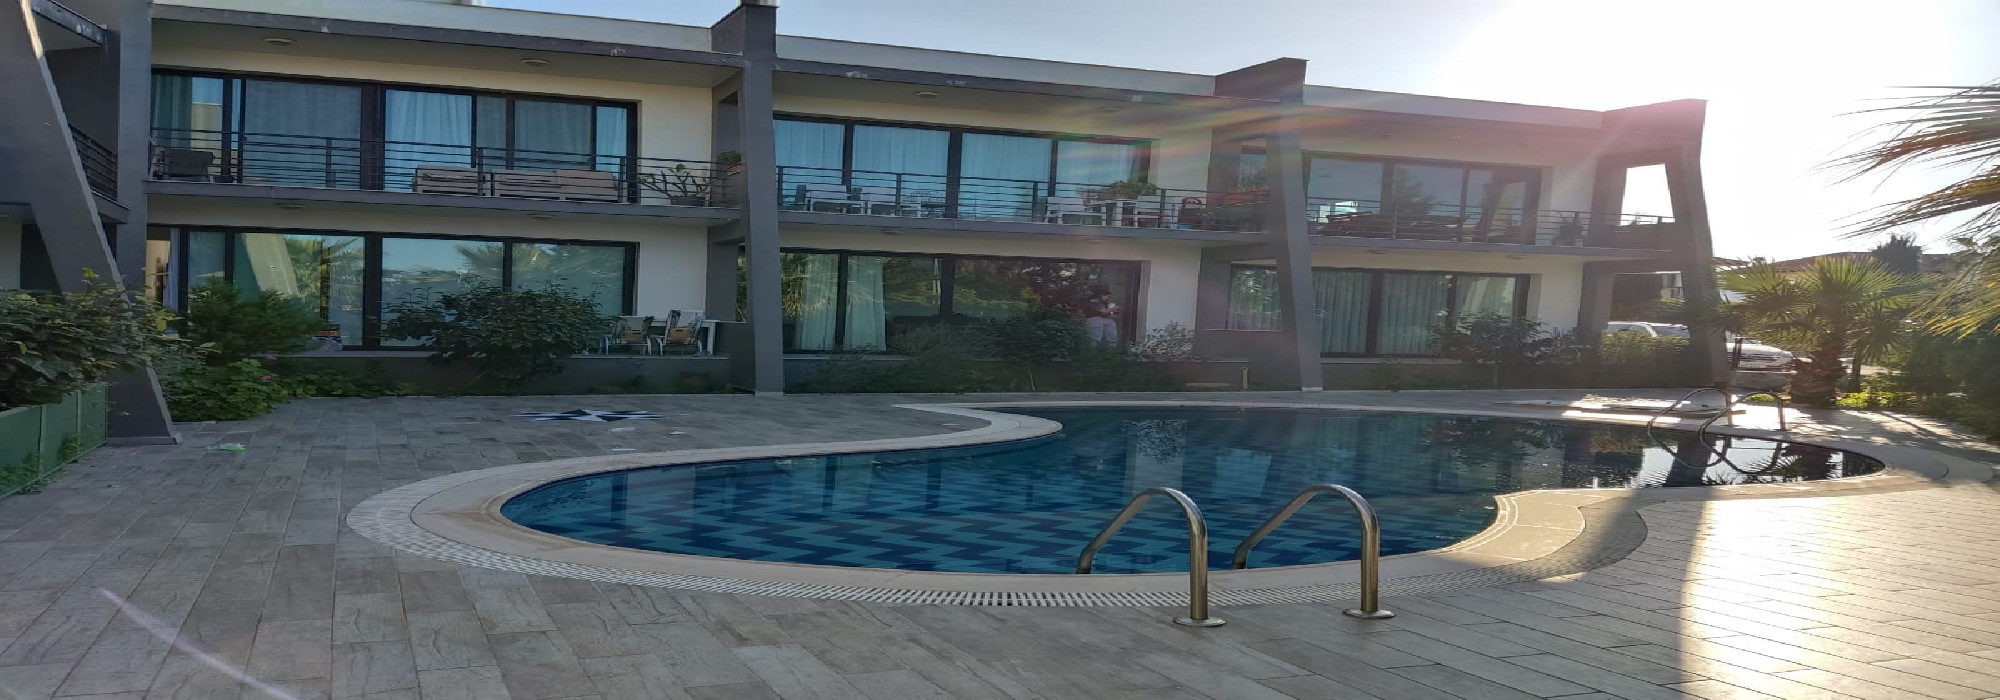 Nice 1 Bedroom Apartment For Rent location Lapta Coastal Walkway (Lapta Yuruyus Yolu) Girne (Communal Swimming Pool)